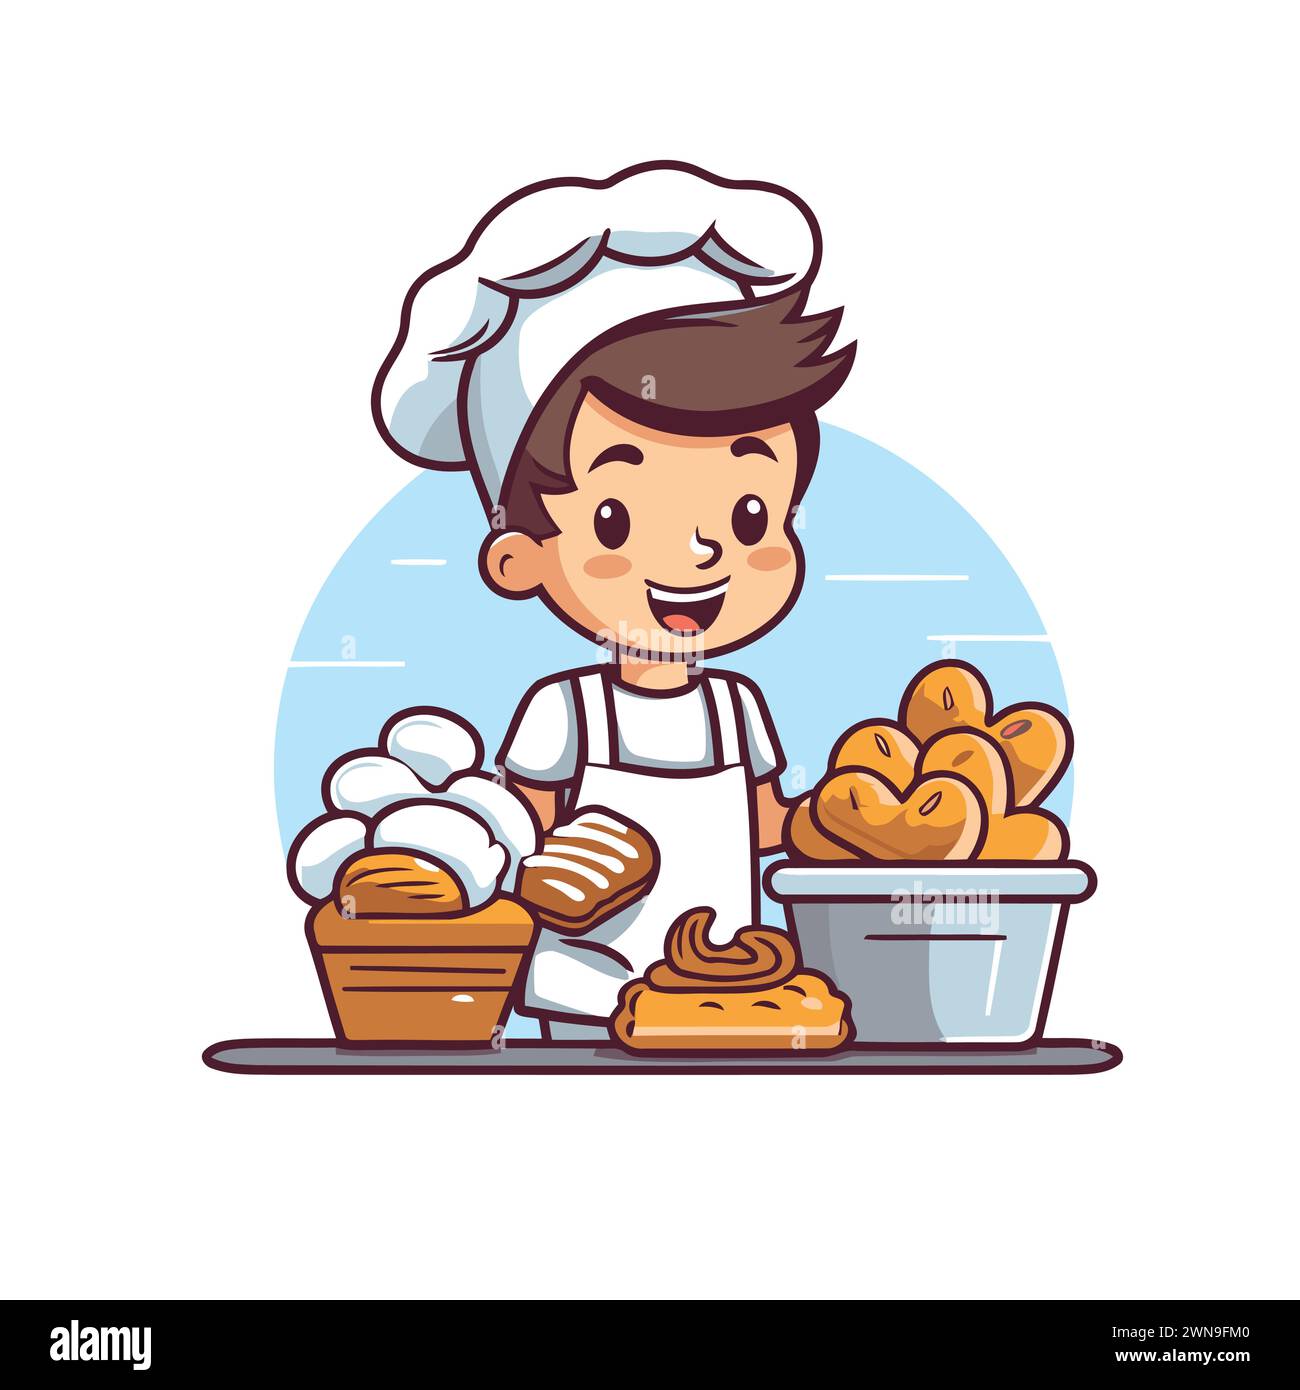 Cute cartoon boy chef with a basket of bread. Vector illustration. Stock Vector